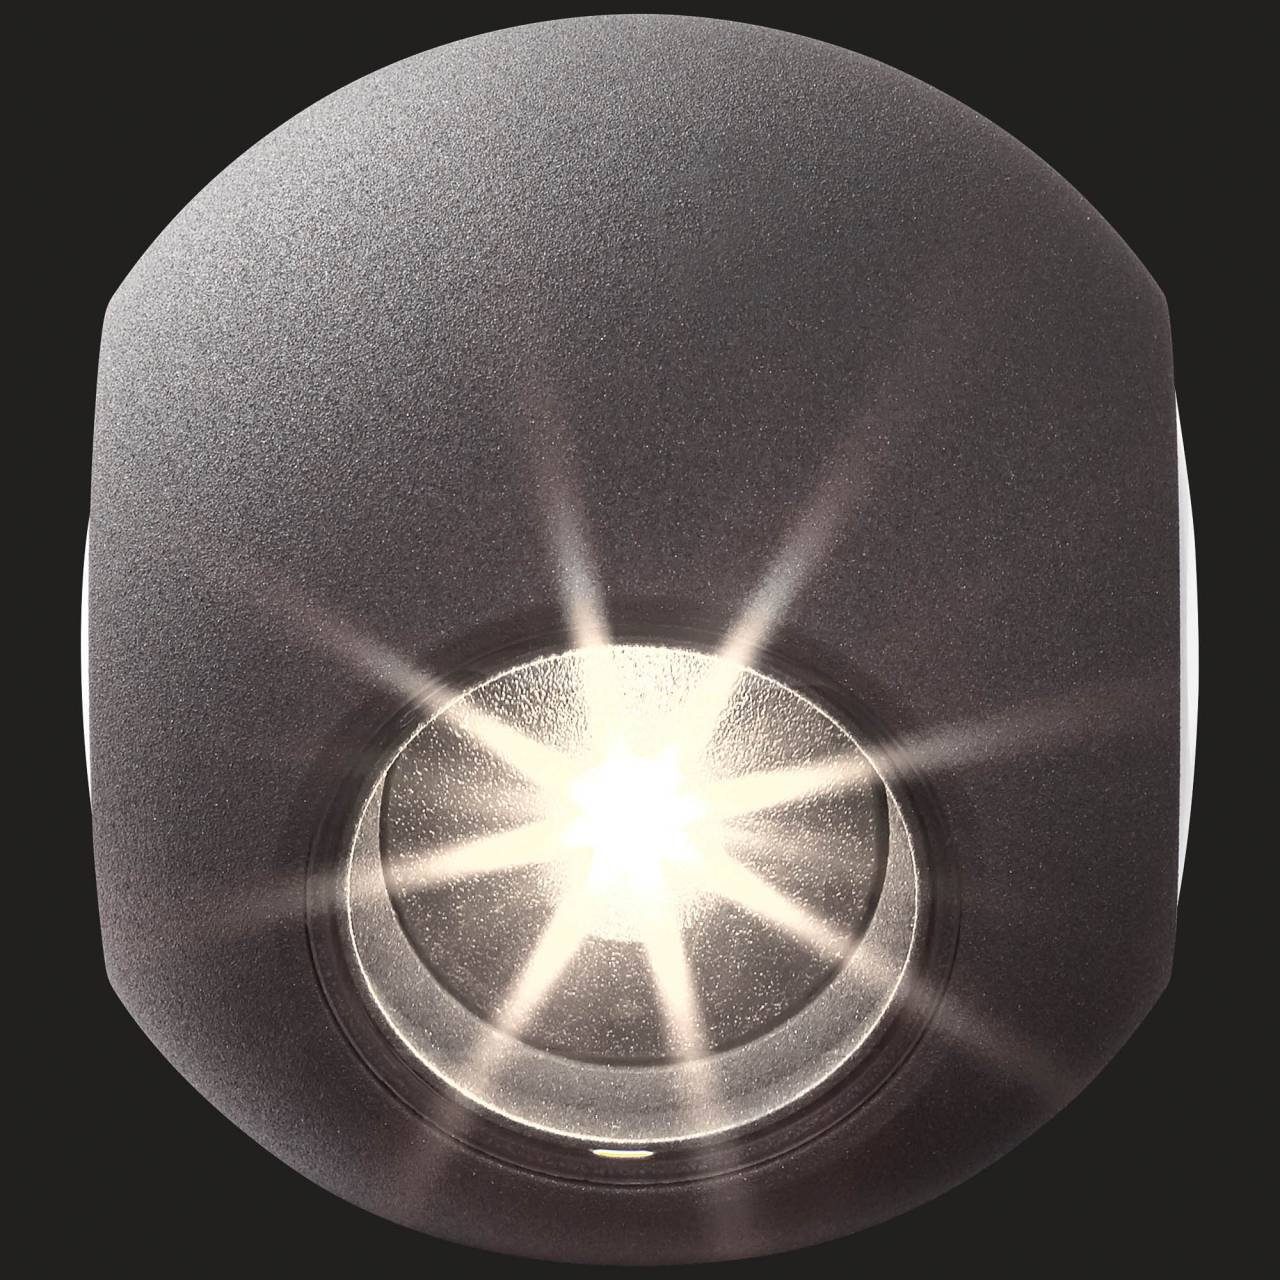 AEG LED Außen-Wandleuchte Gus, LED fest integriert, Warmweiß, Ø 10 cm, 4 x  3 W, 720 lm, IP54, Alu-Druckguss/Glas, anthrazit